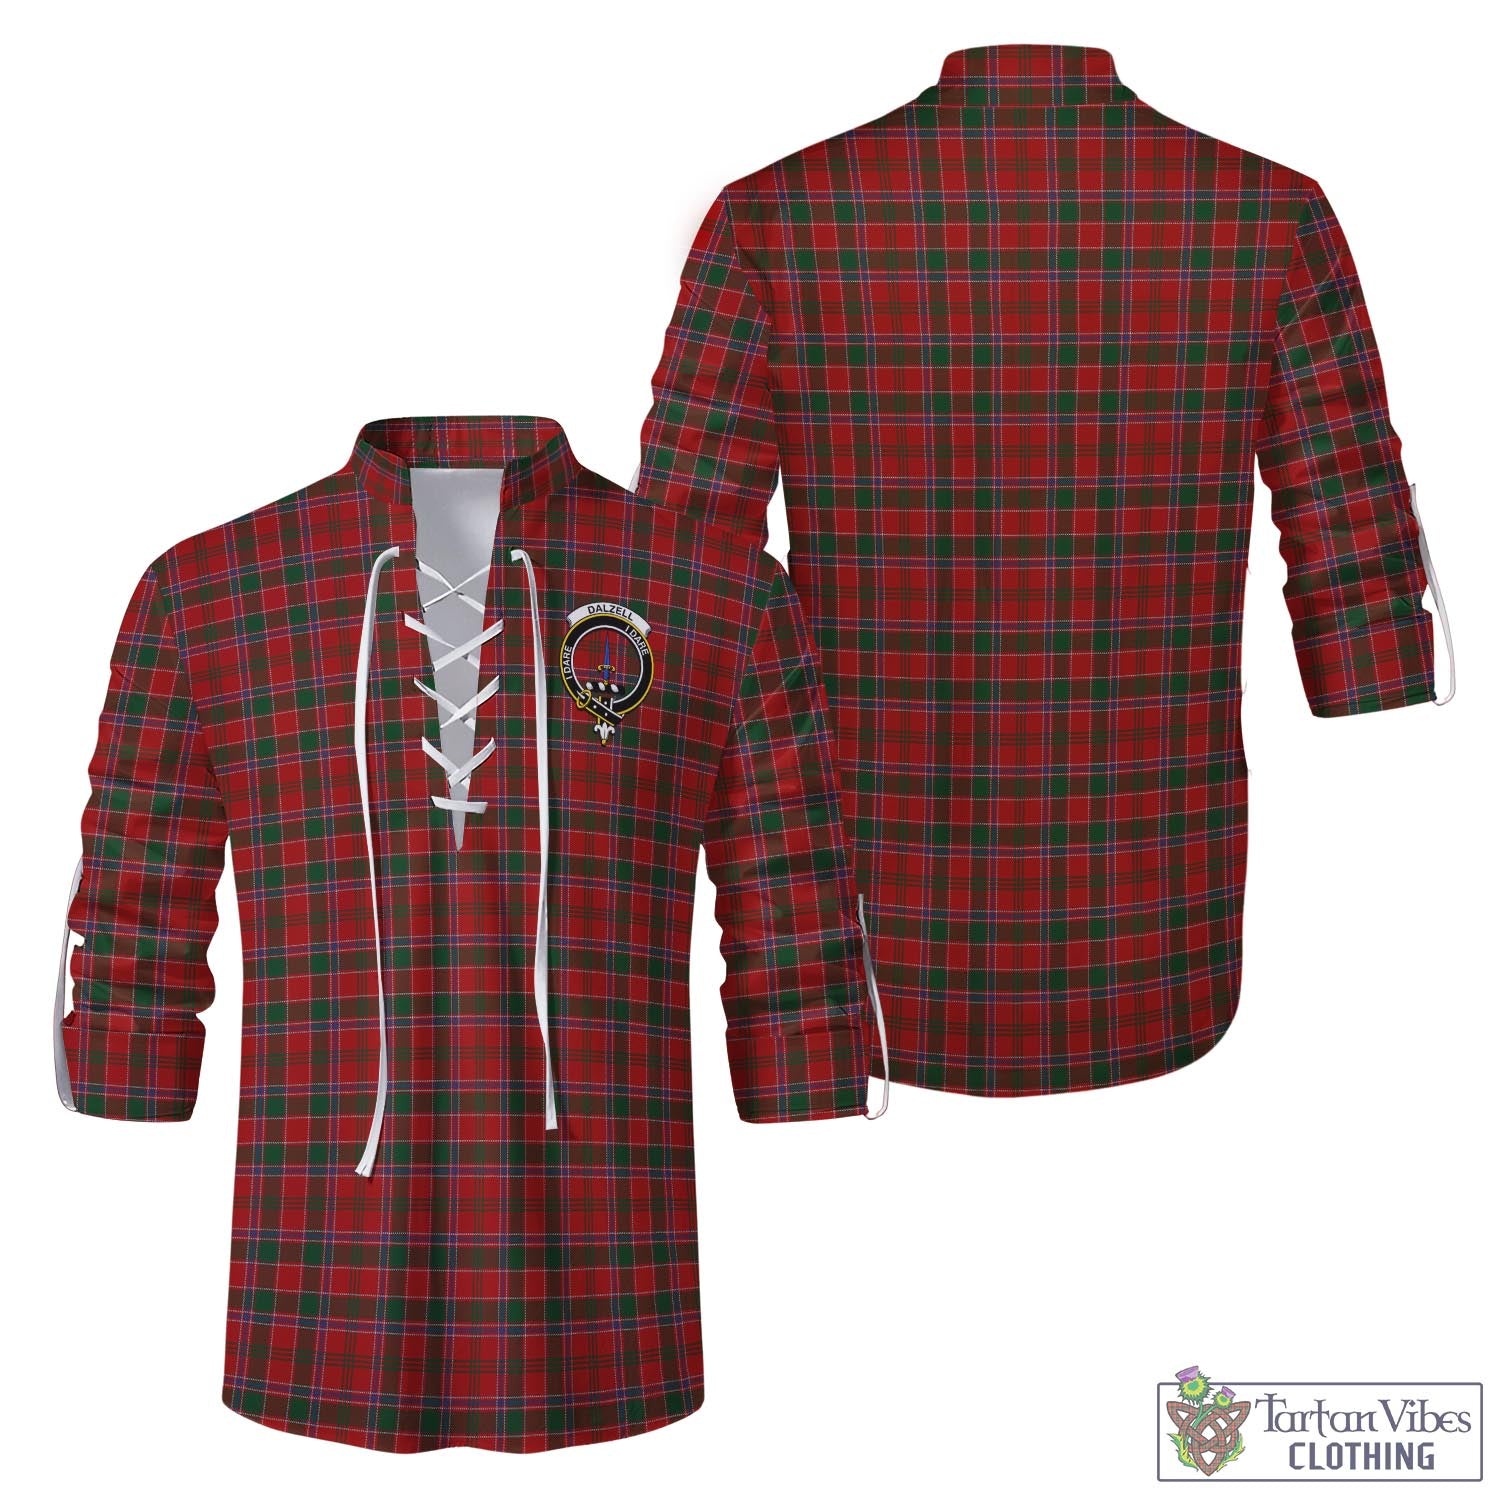 Tartan Vibes Clothing Dalzell (Dalziel) Tartan Men's Scottish Traditional Jacobite Ghillie Kilt Shirt with Family Crest